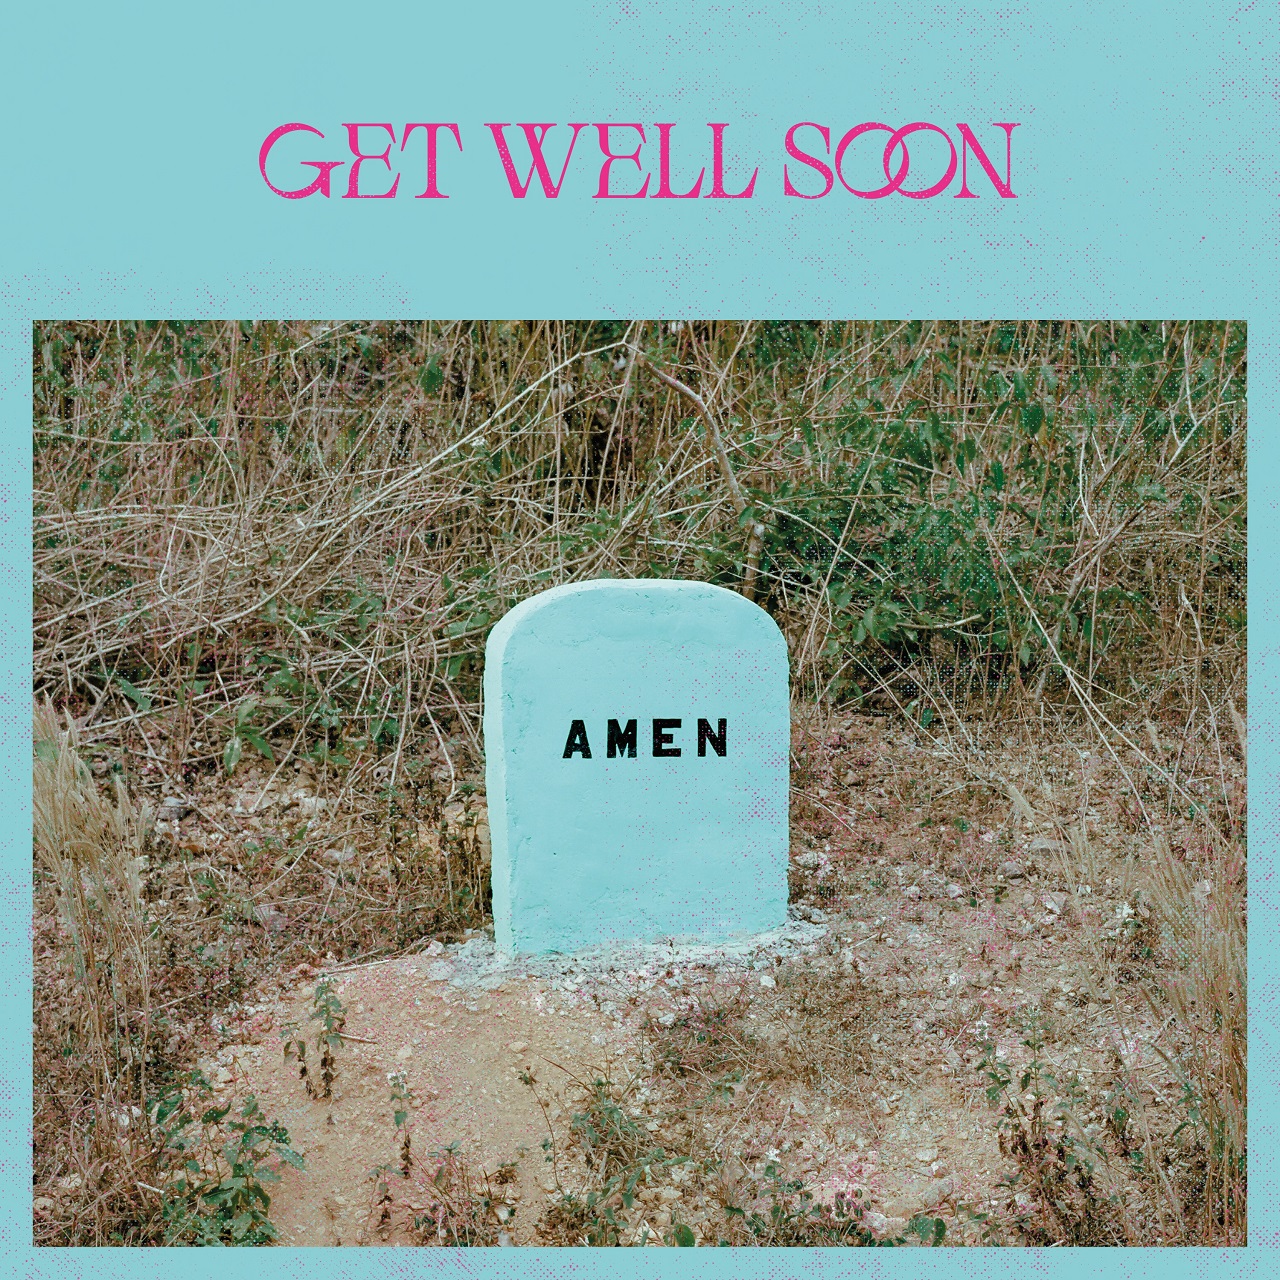 Albumcover von Get Well Soons neuem Album "Amen"